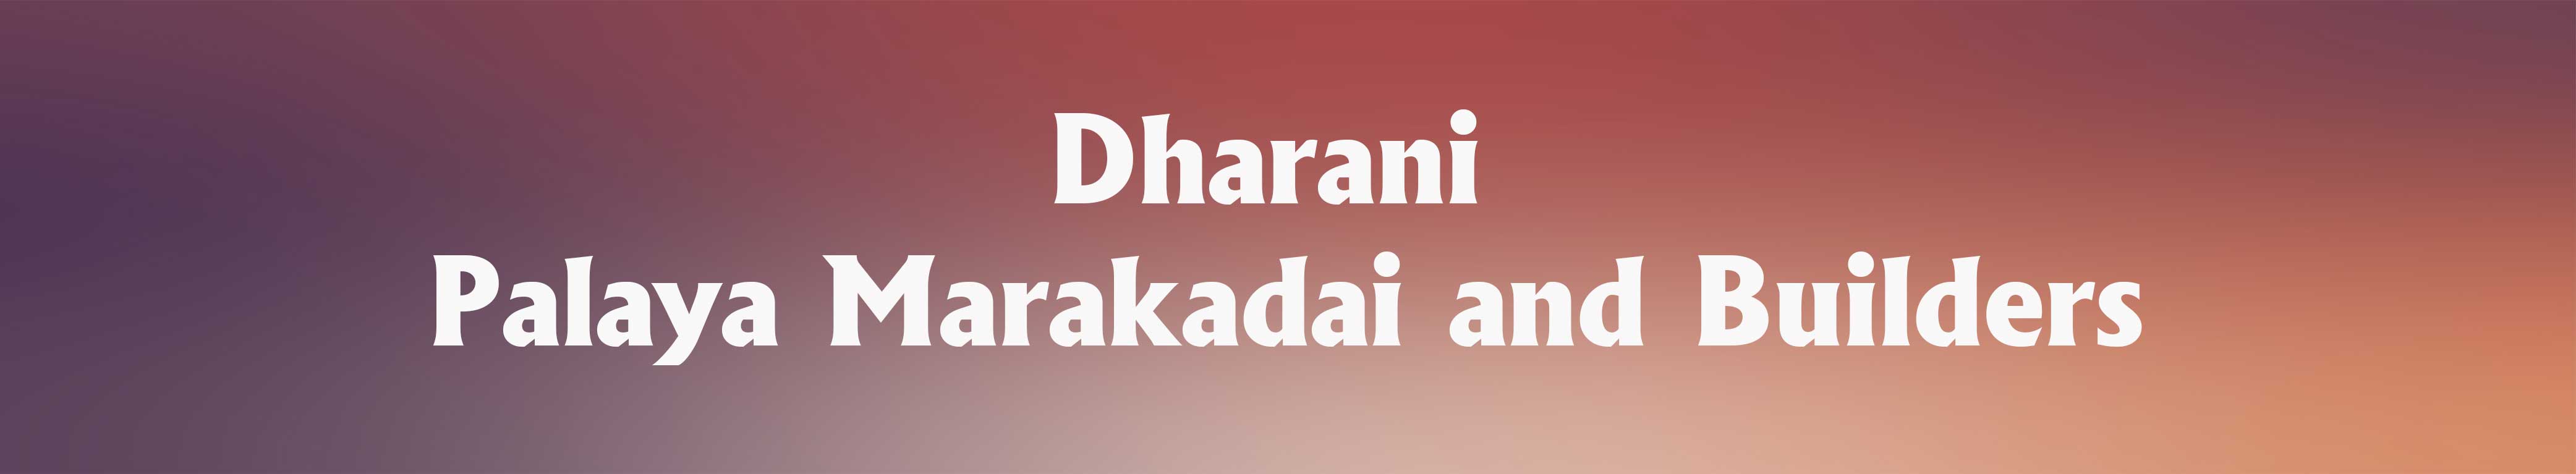 Dharani Palaya Marakadai and Builders Banner Image